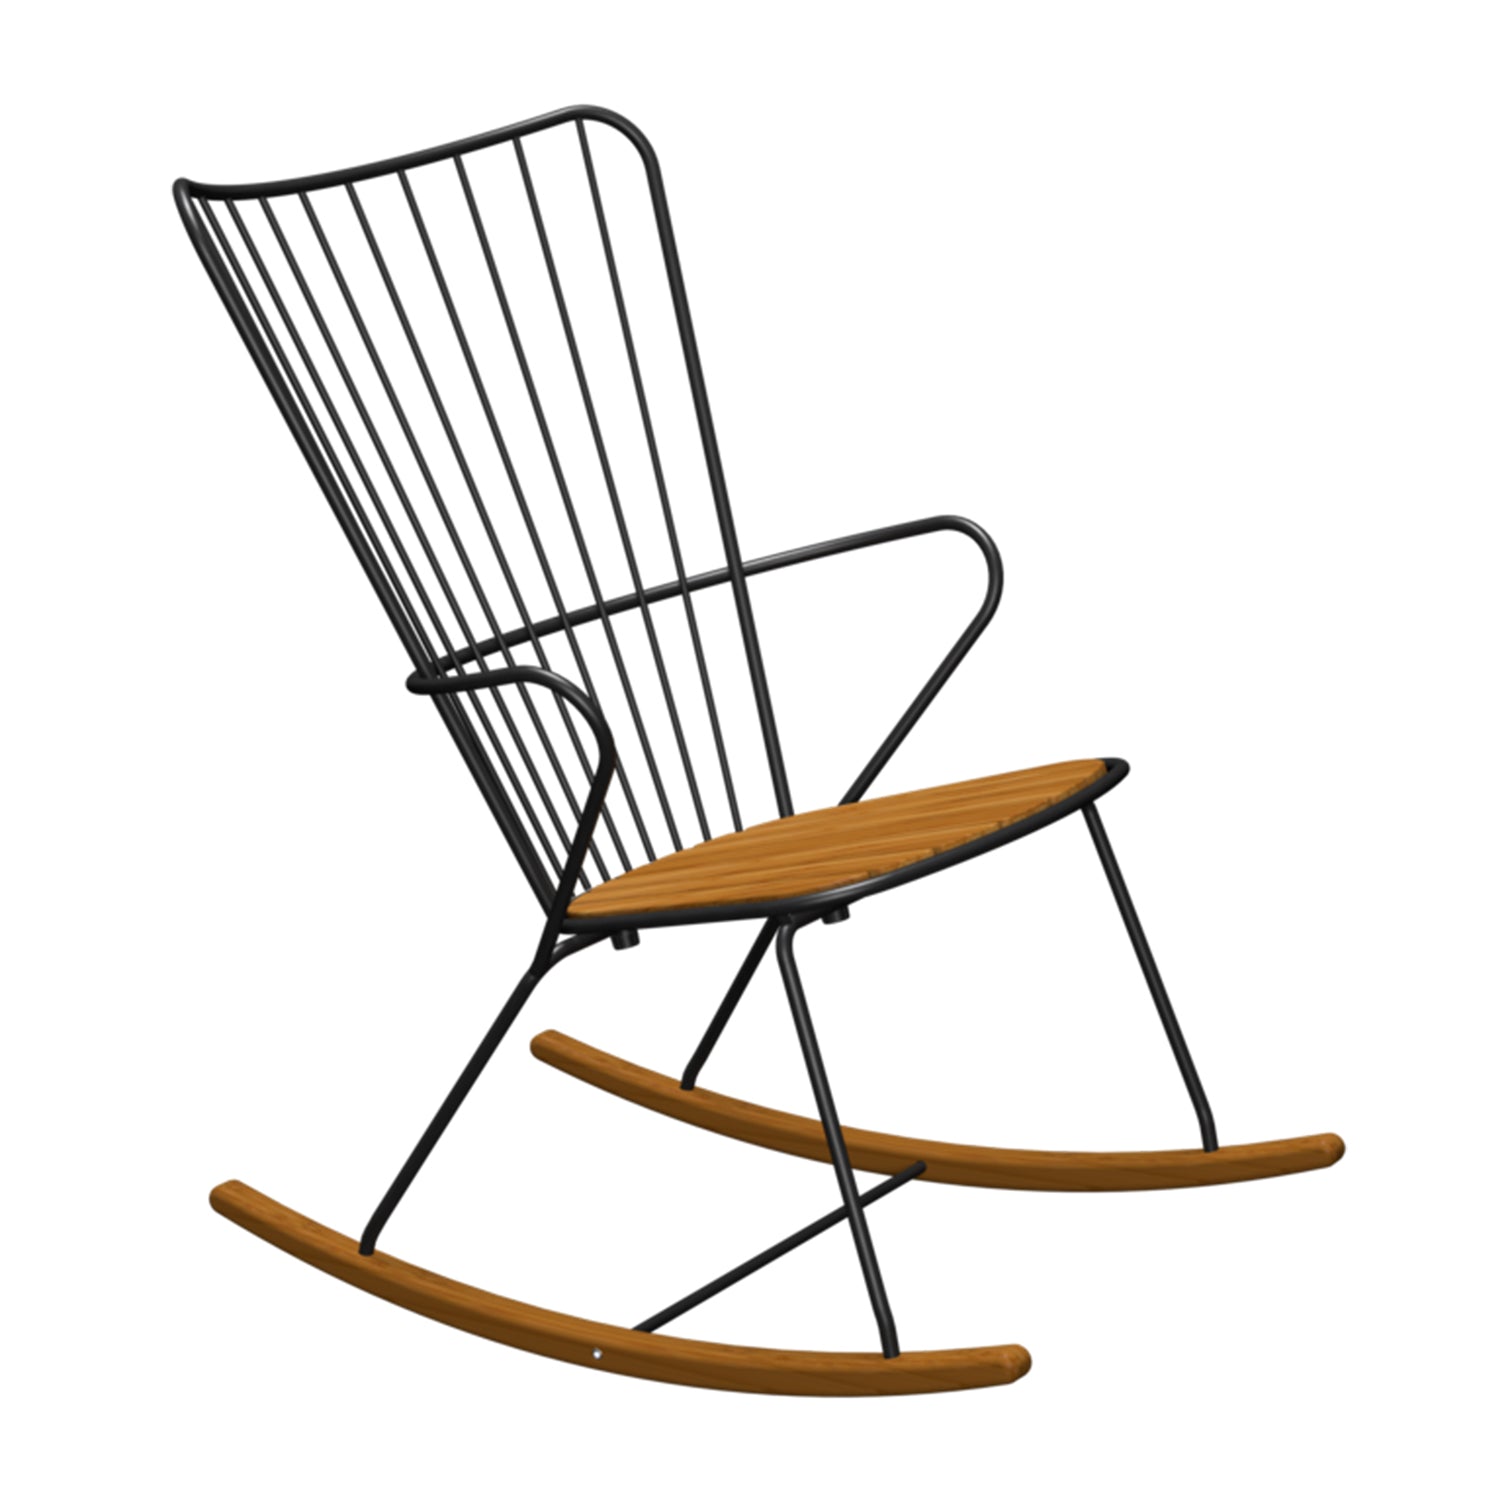 Paon Rocking Chair - The Design Choice